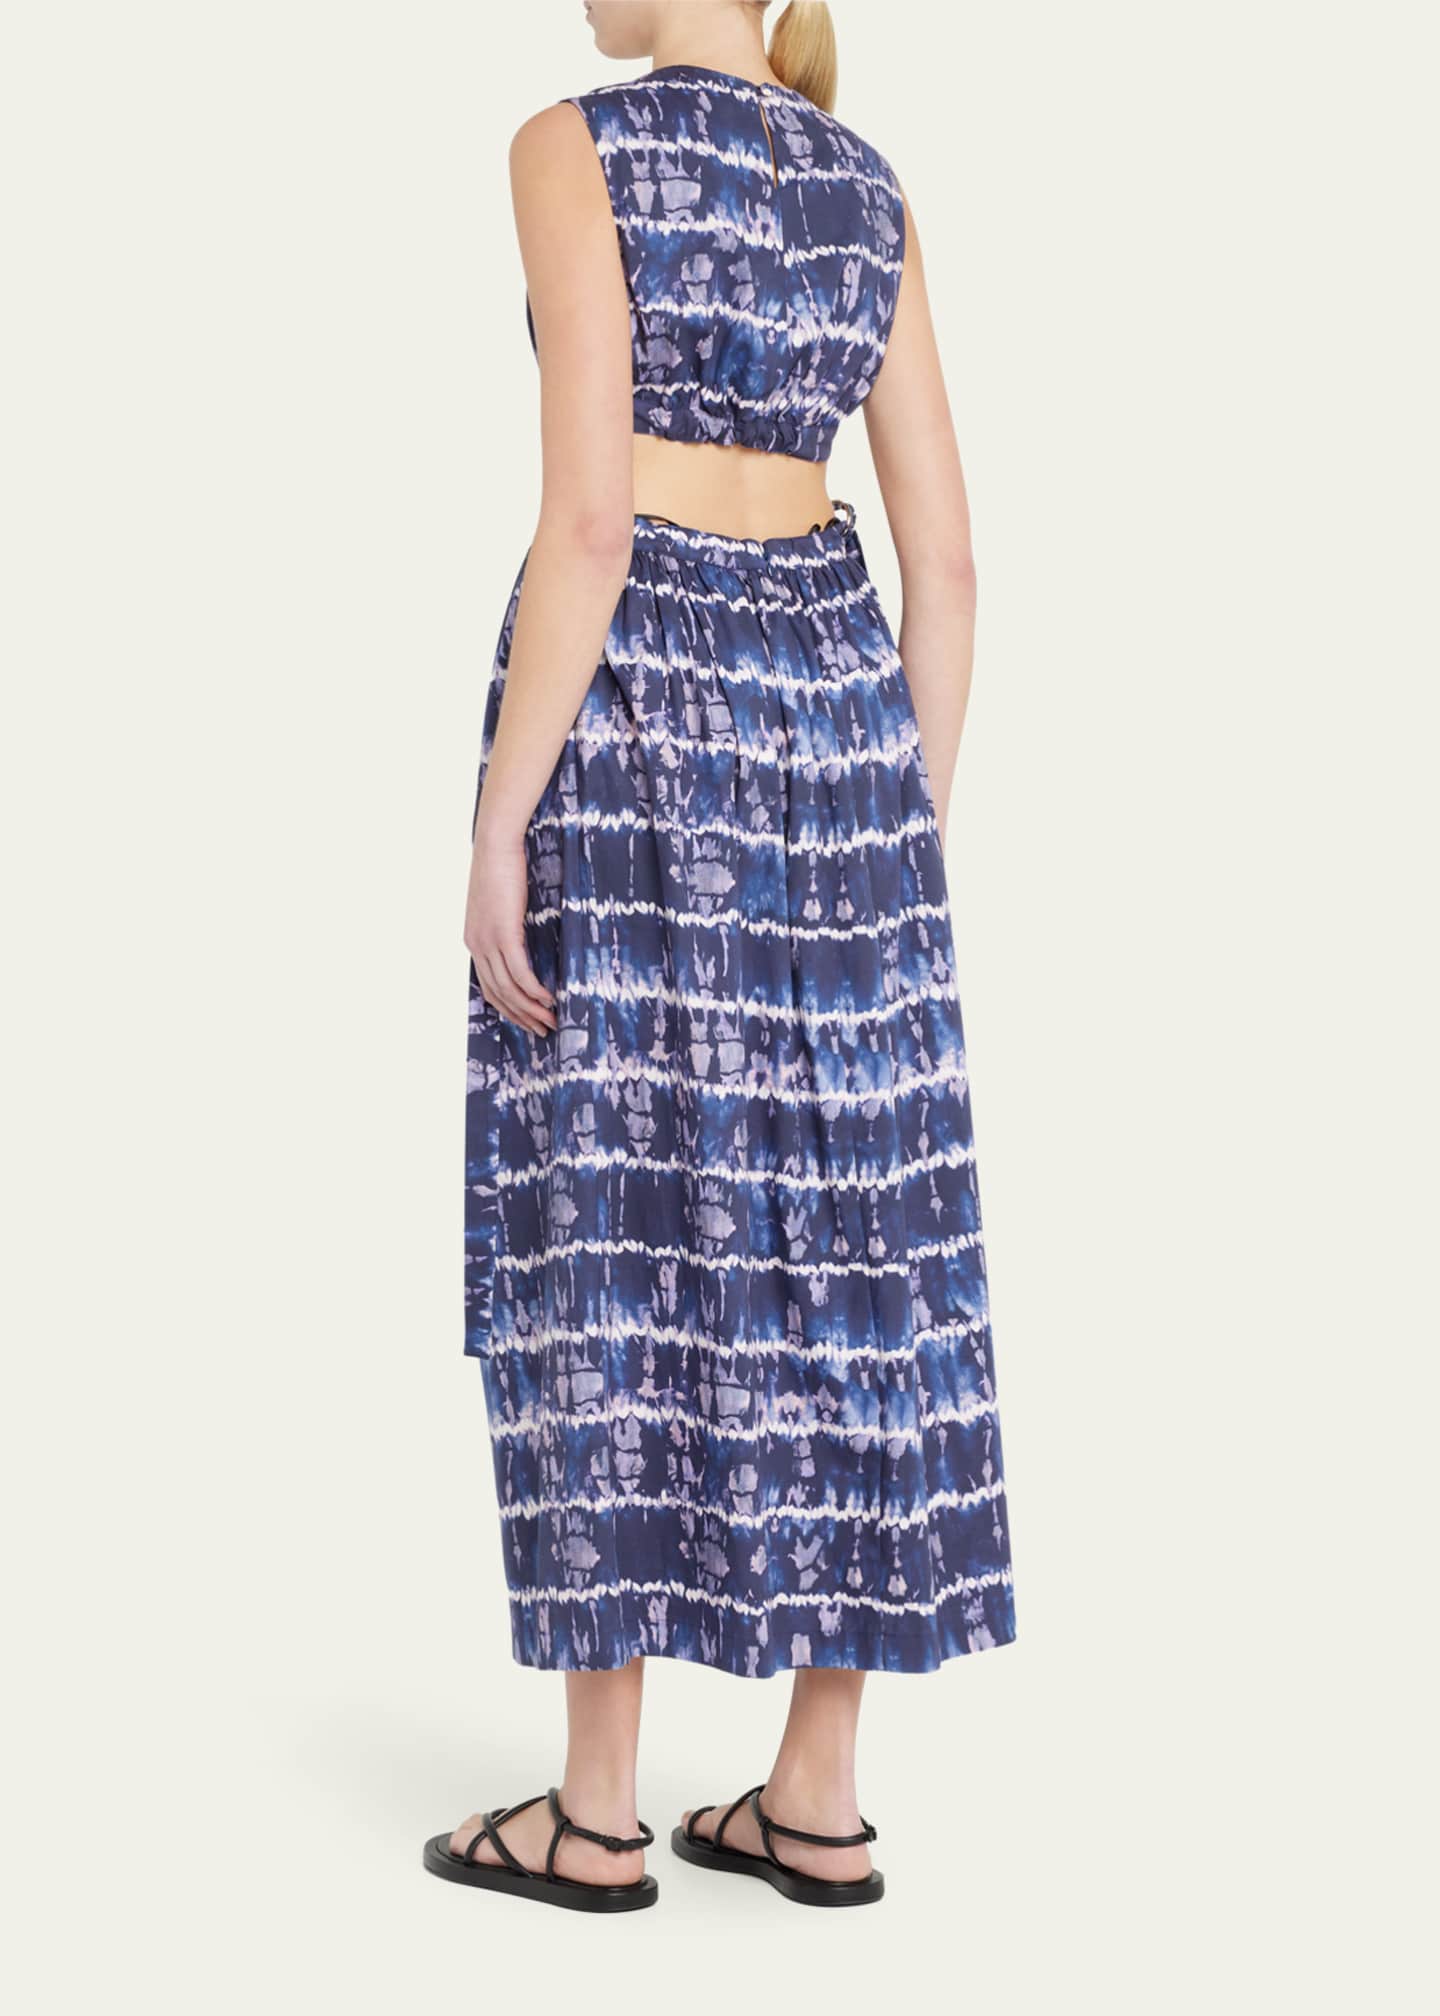 Altuzarra Ashima Tie-Dye Cutout Midi Dress - Bergdorf Goodman